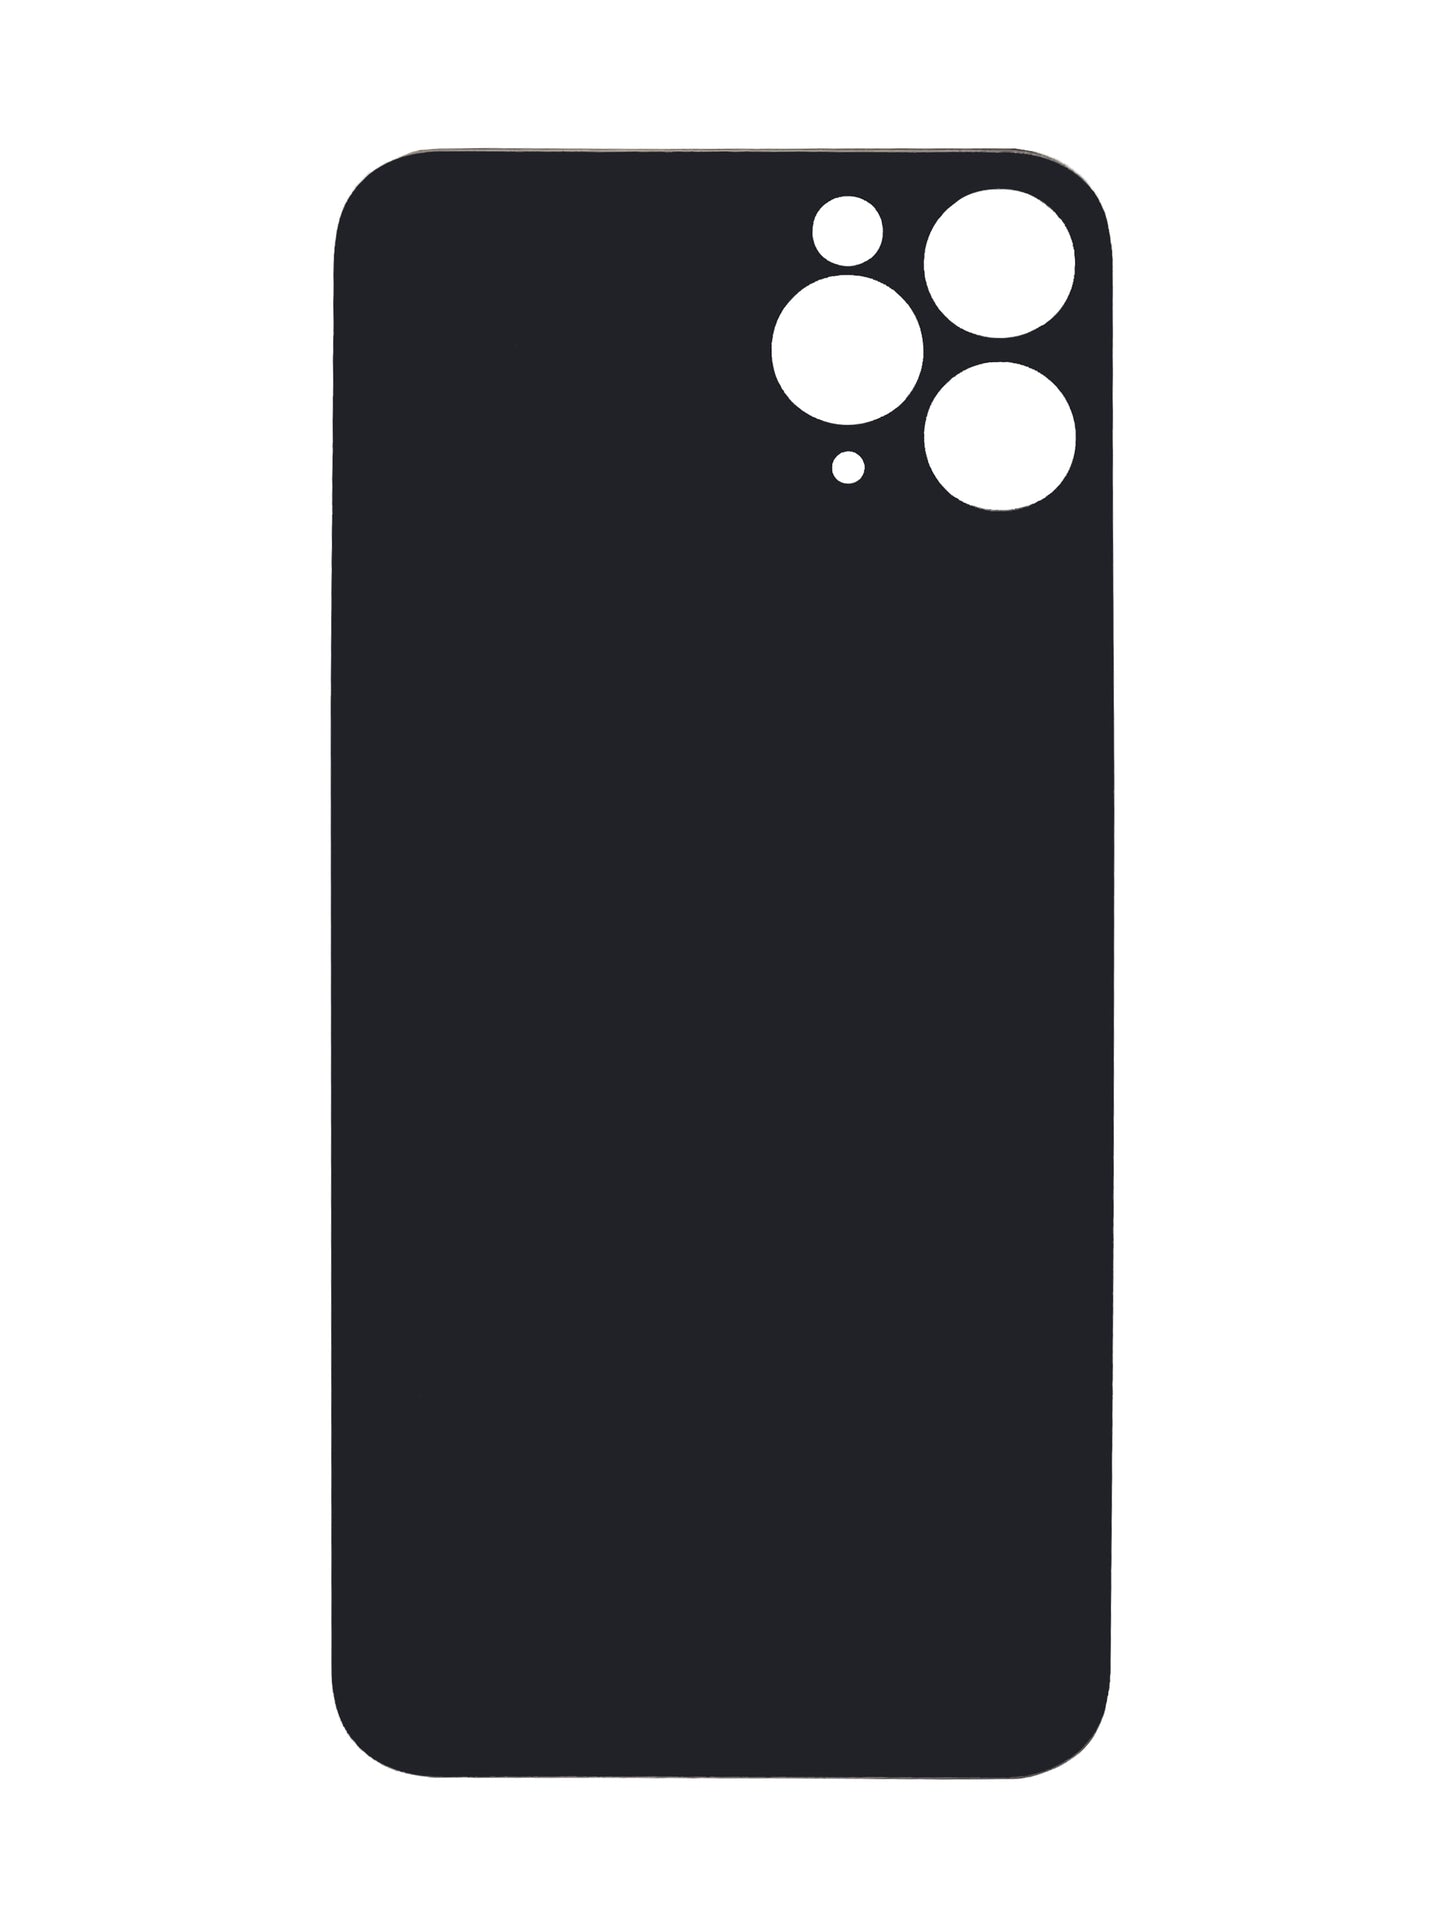 iPhone 11 Pro Back Glass (No Logo) (White)